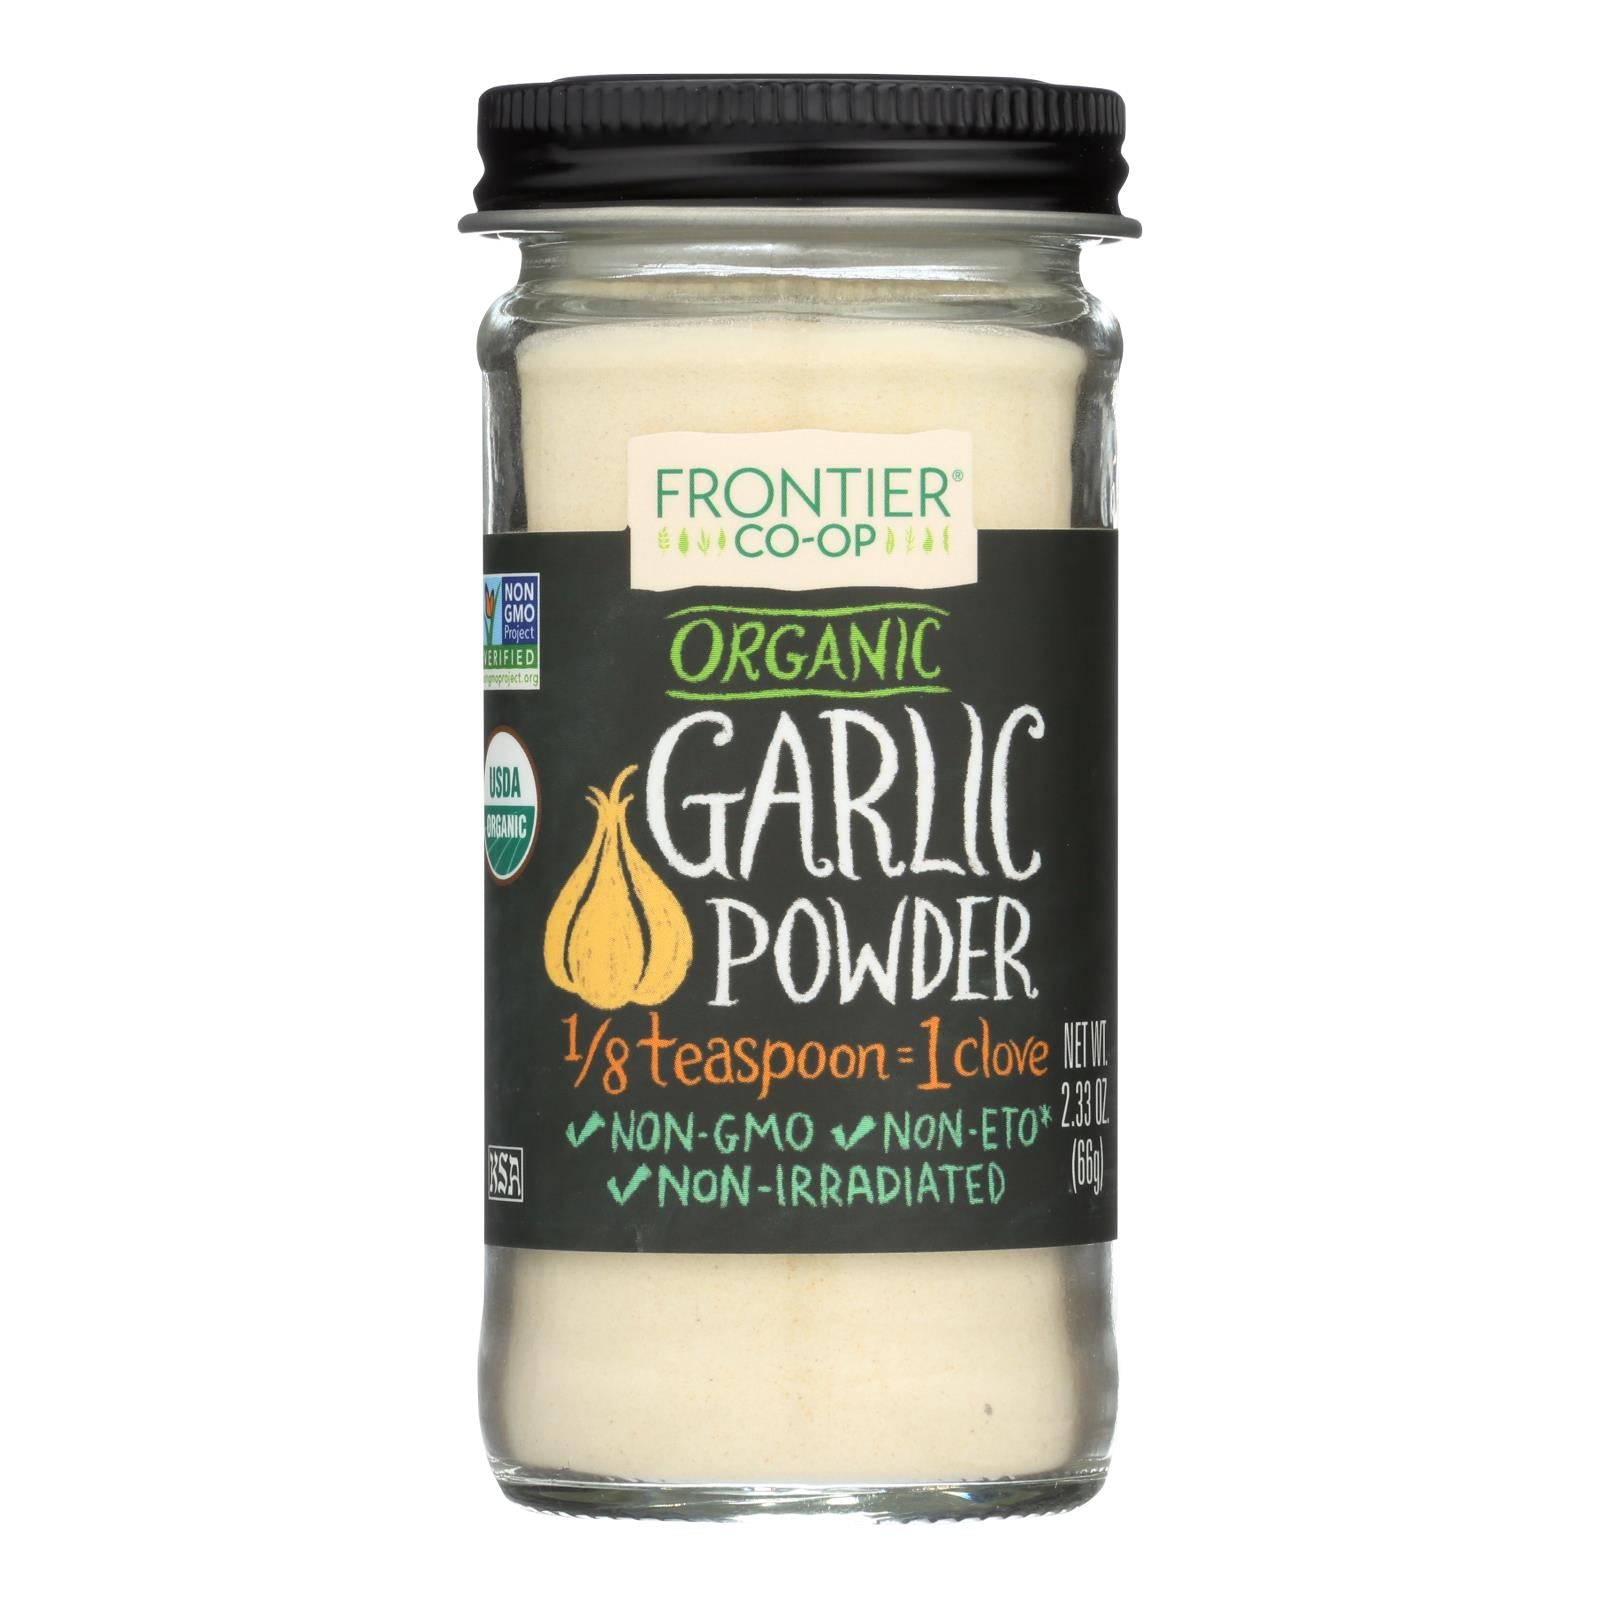 Frontier Herb Garlic - Organic - Powder - 2.33 Oz - Whole Green Foods